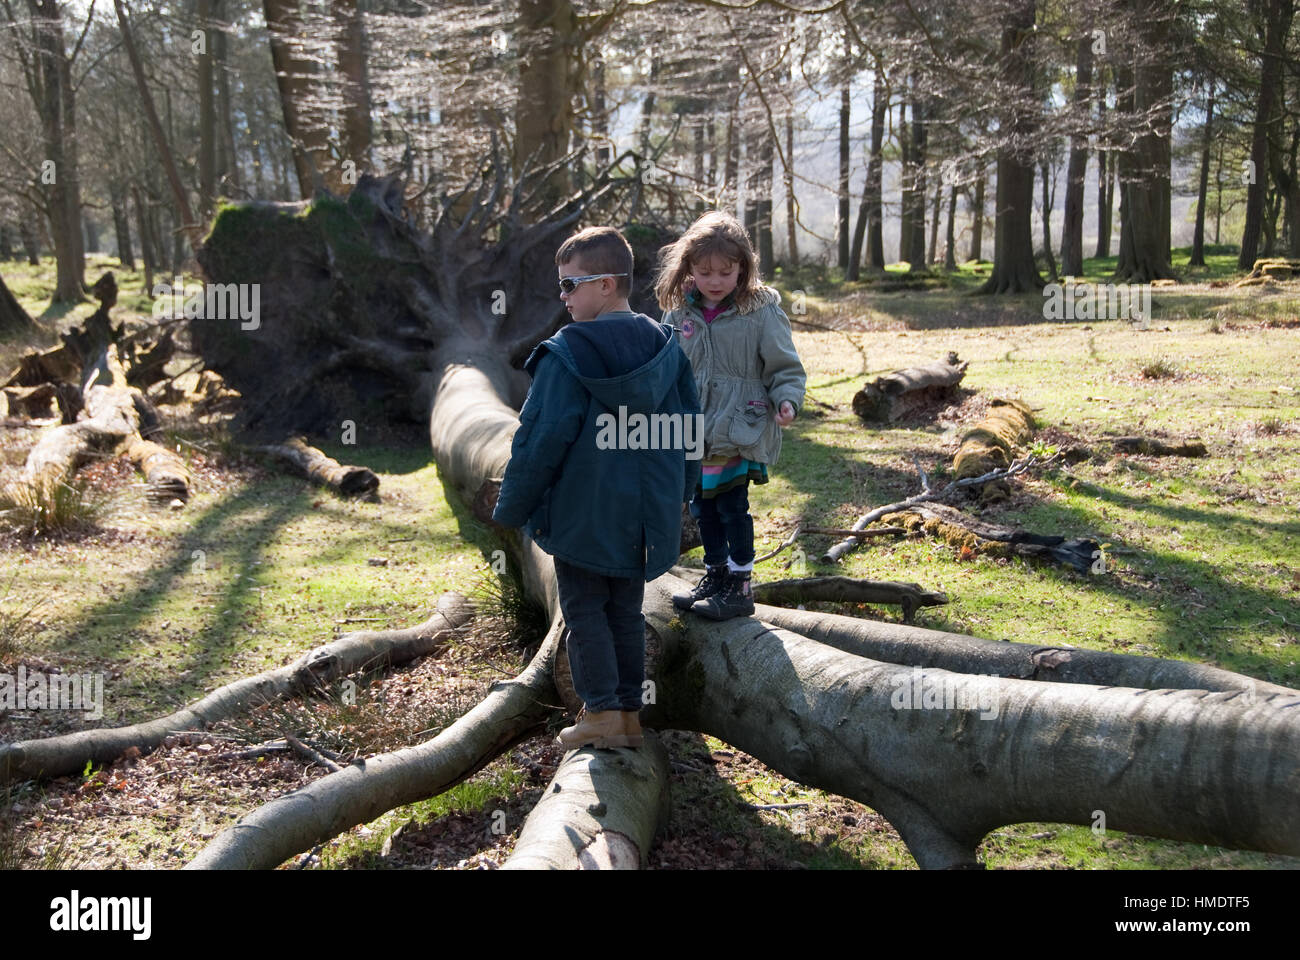 Derbyshire, UK - April 04: Children play on a fallen tree trunk on 18 April at Longshaw Estate, Peak District, UK Stock Photo